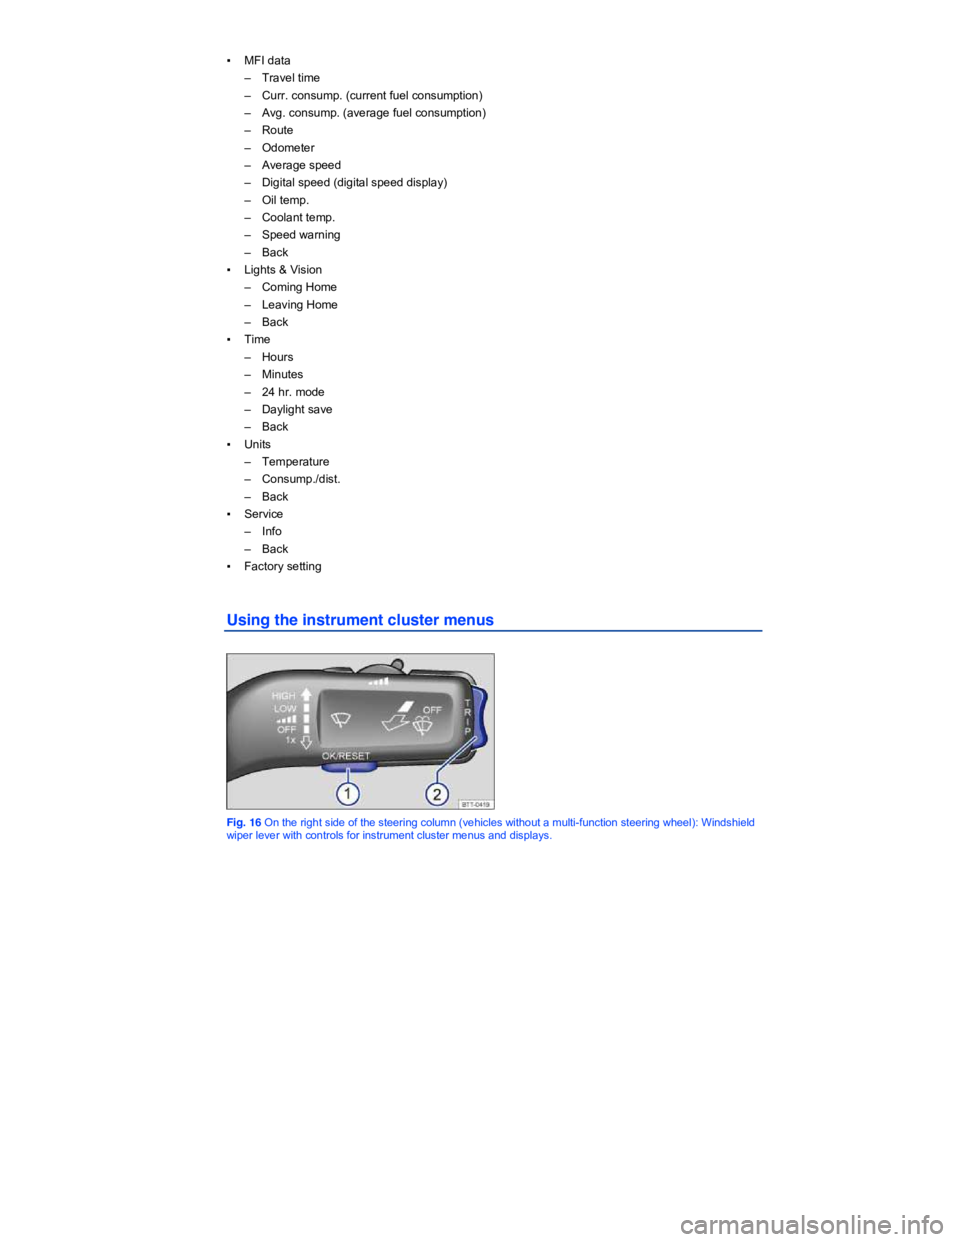 VOLKSWAGEN BEETLE 2015  Owner´s Manual  
▪ MFI data 
–  Travel time 
–  Curr. consump. (current fuel consumption) 
–  Avg. consump. (average fuel consumption) 
–  Route 
–  Odometer 
–  Average speed 
–  Digital speed (digi